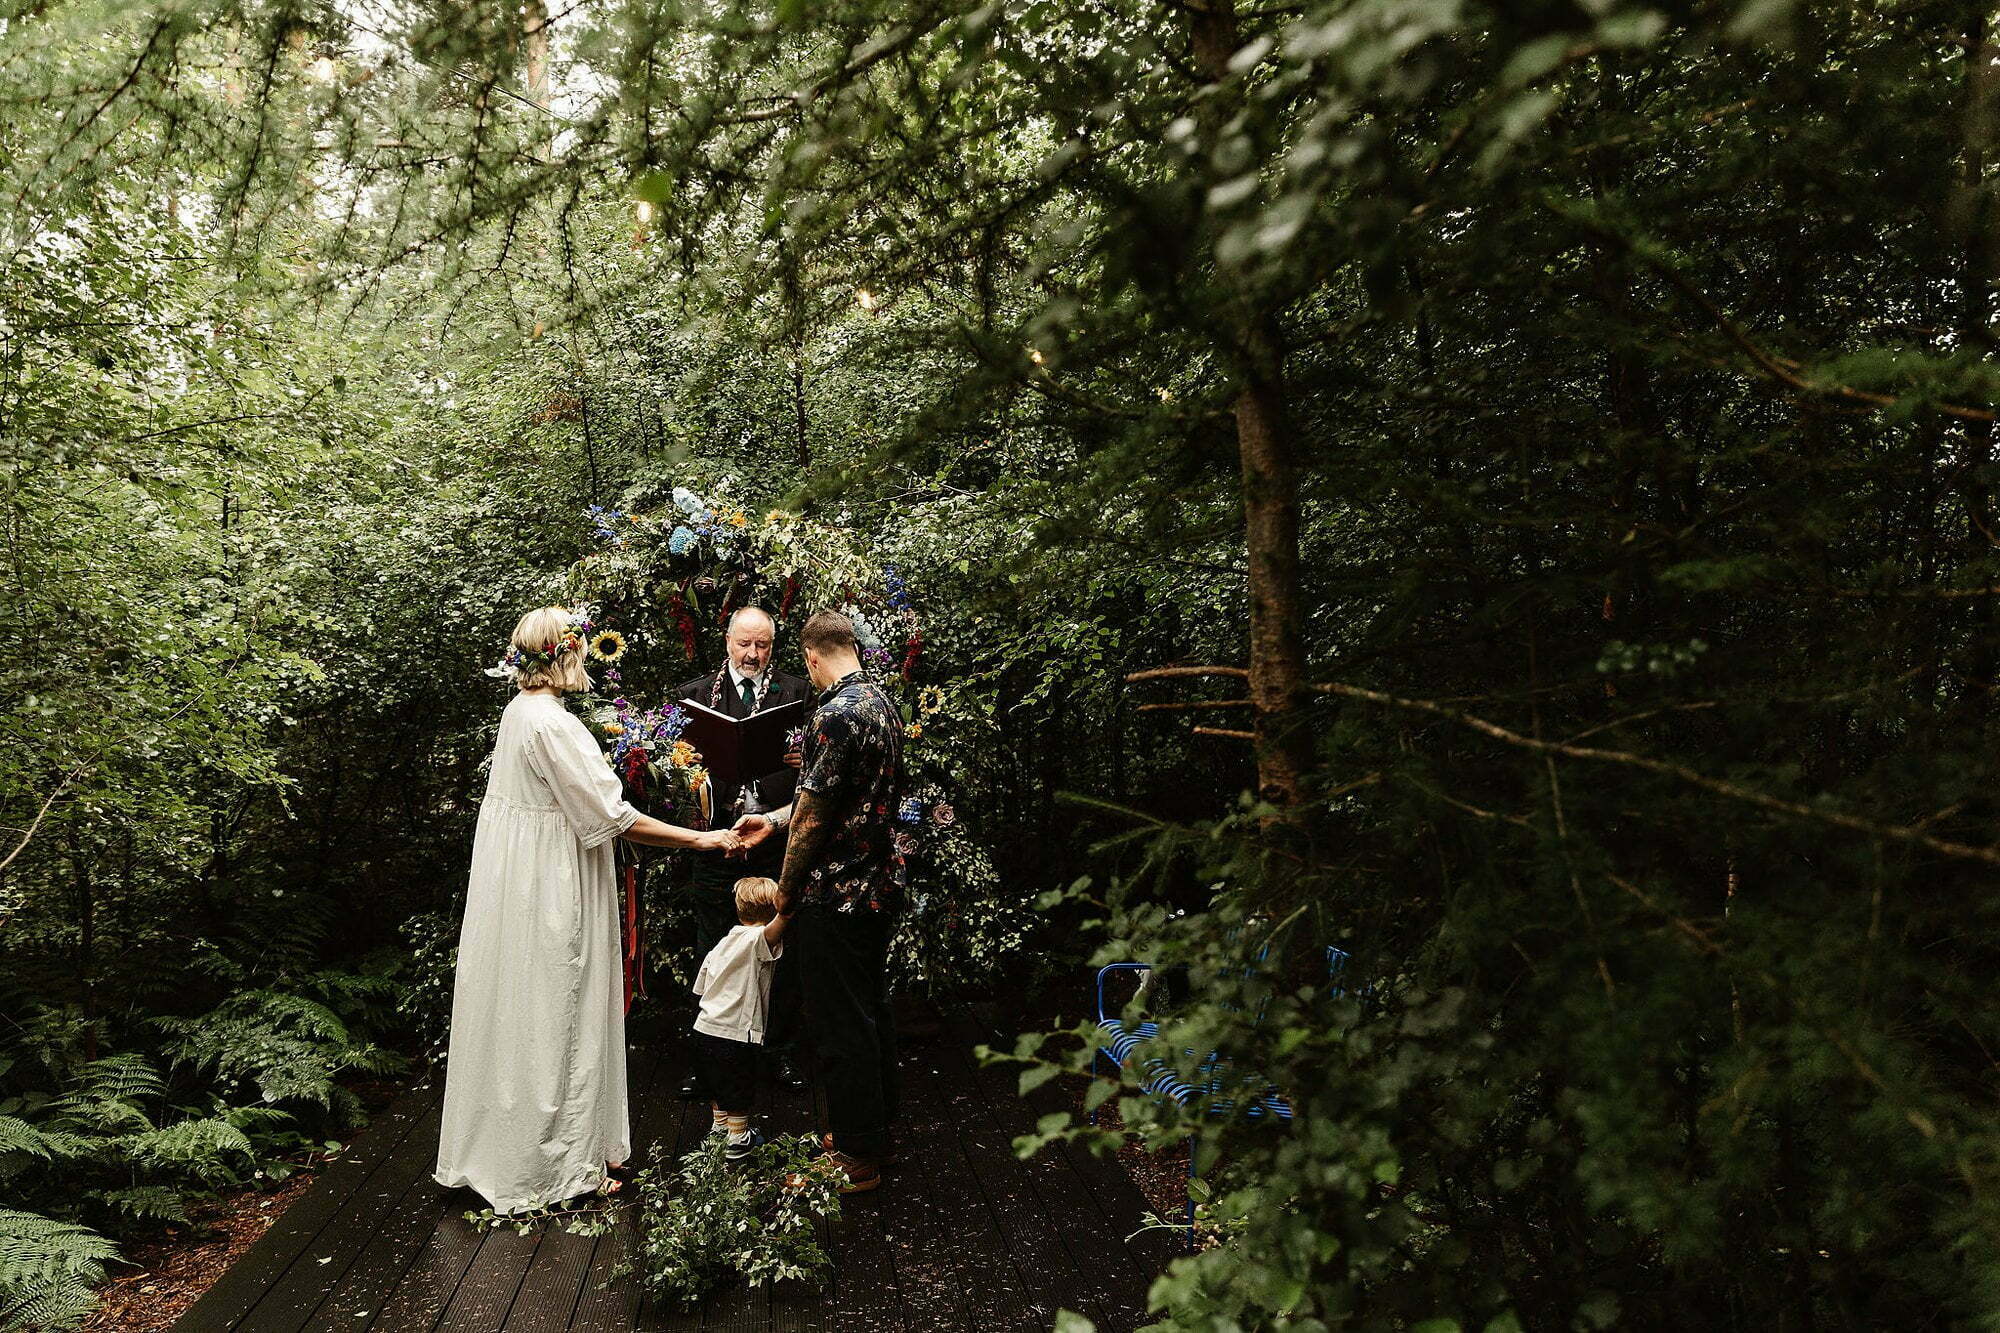 Bride groom outdoor woodland humanist wedding ceremony colourful flower arch glen dye